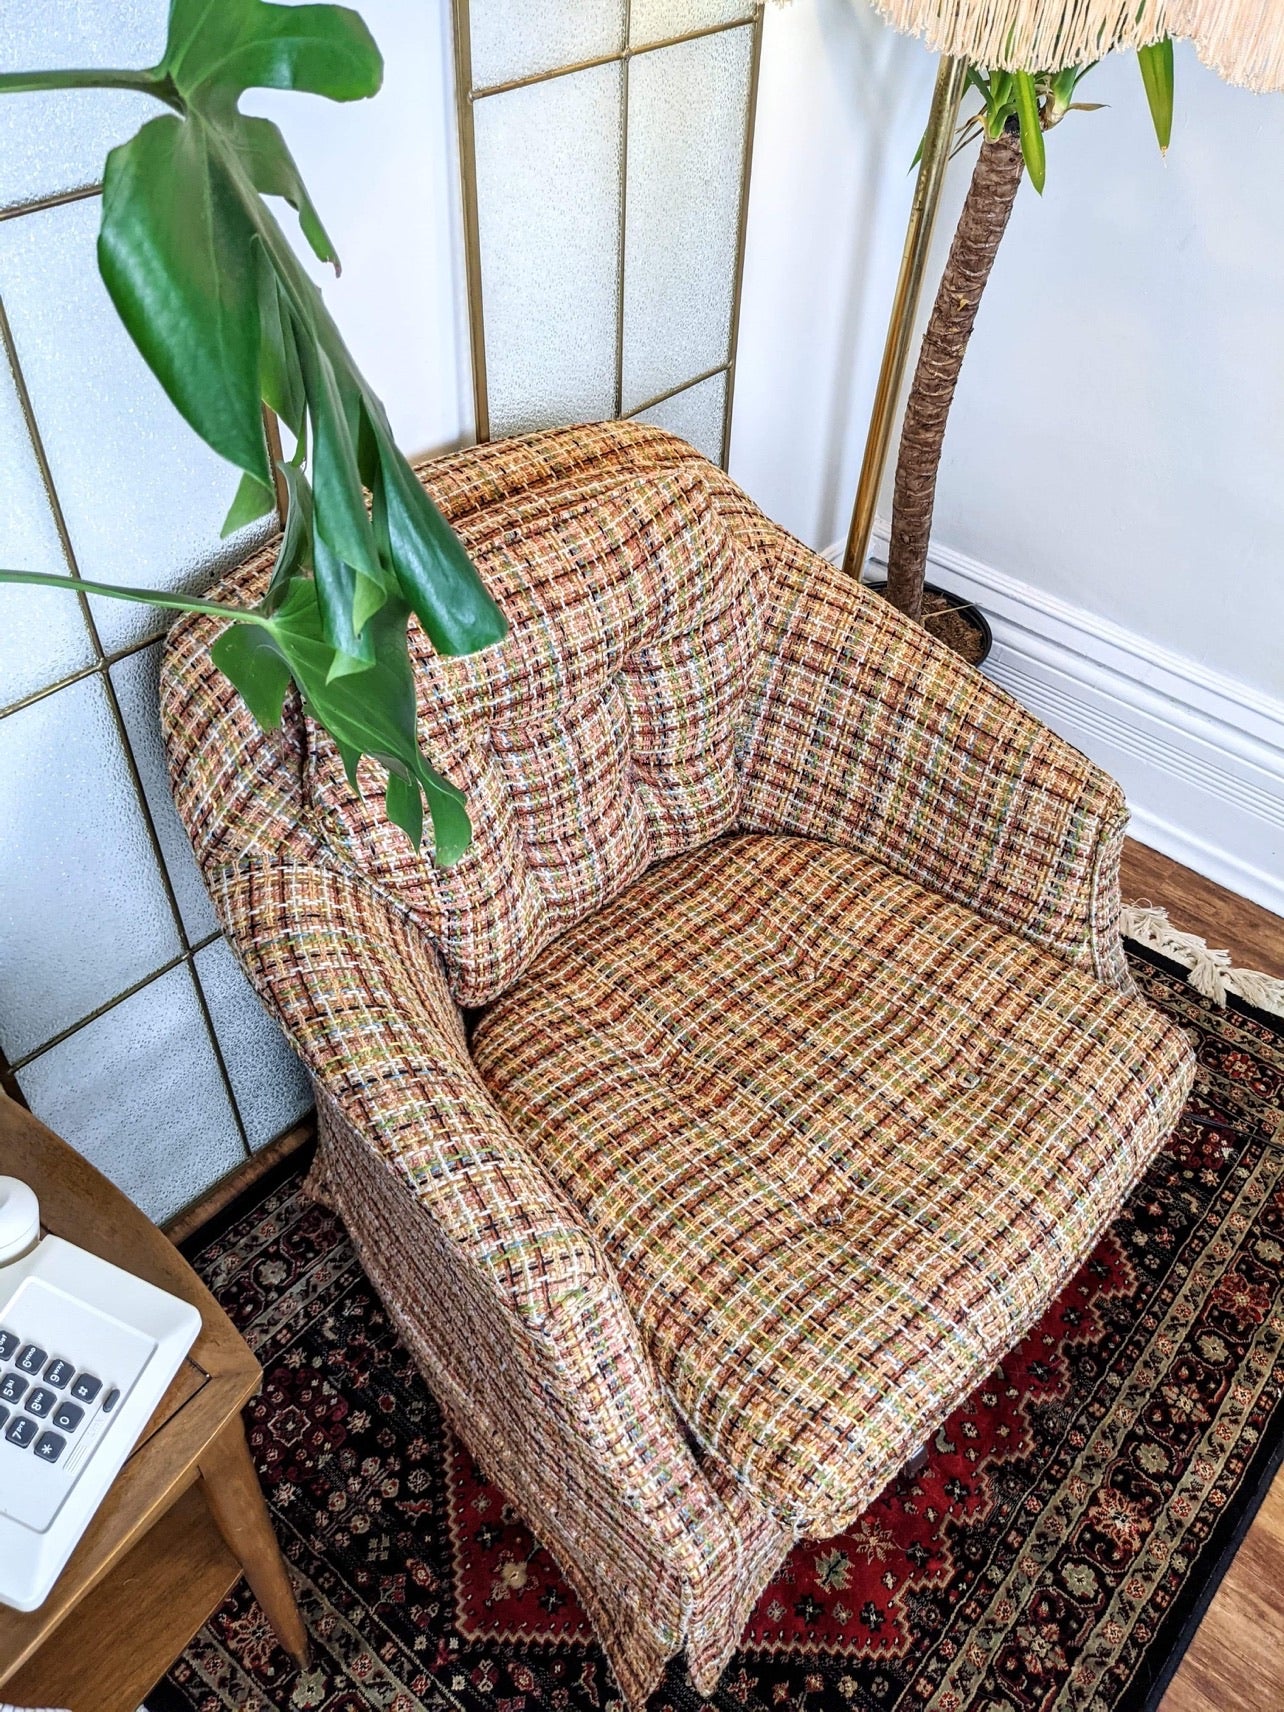 The Tyrone Tweed Chair